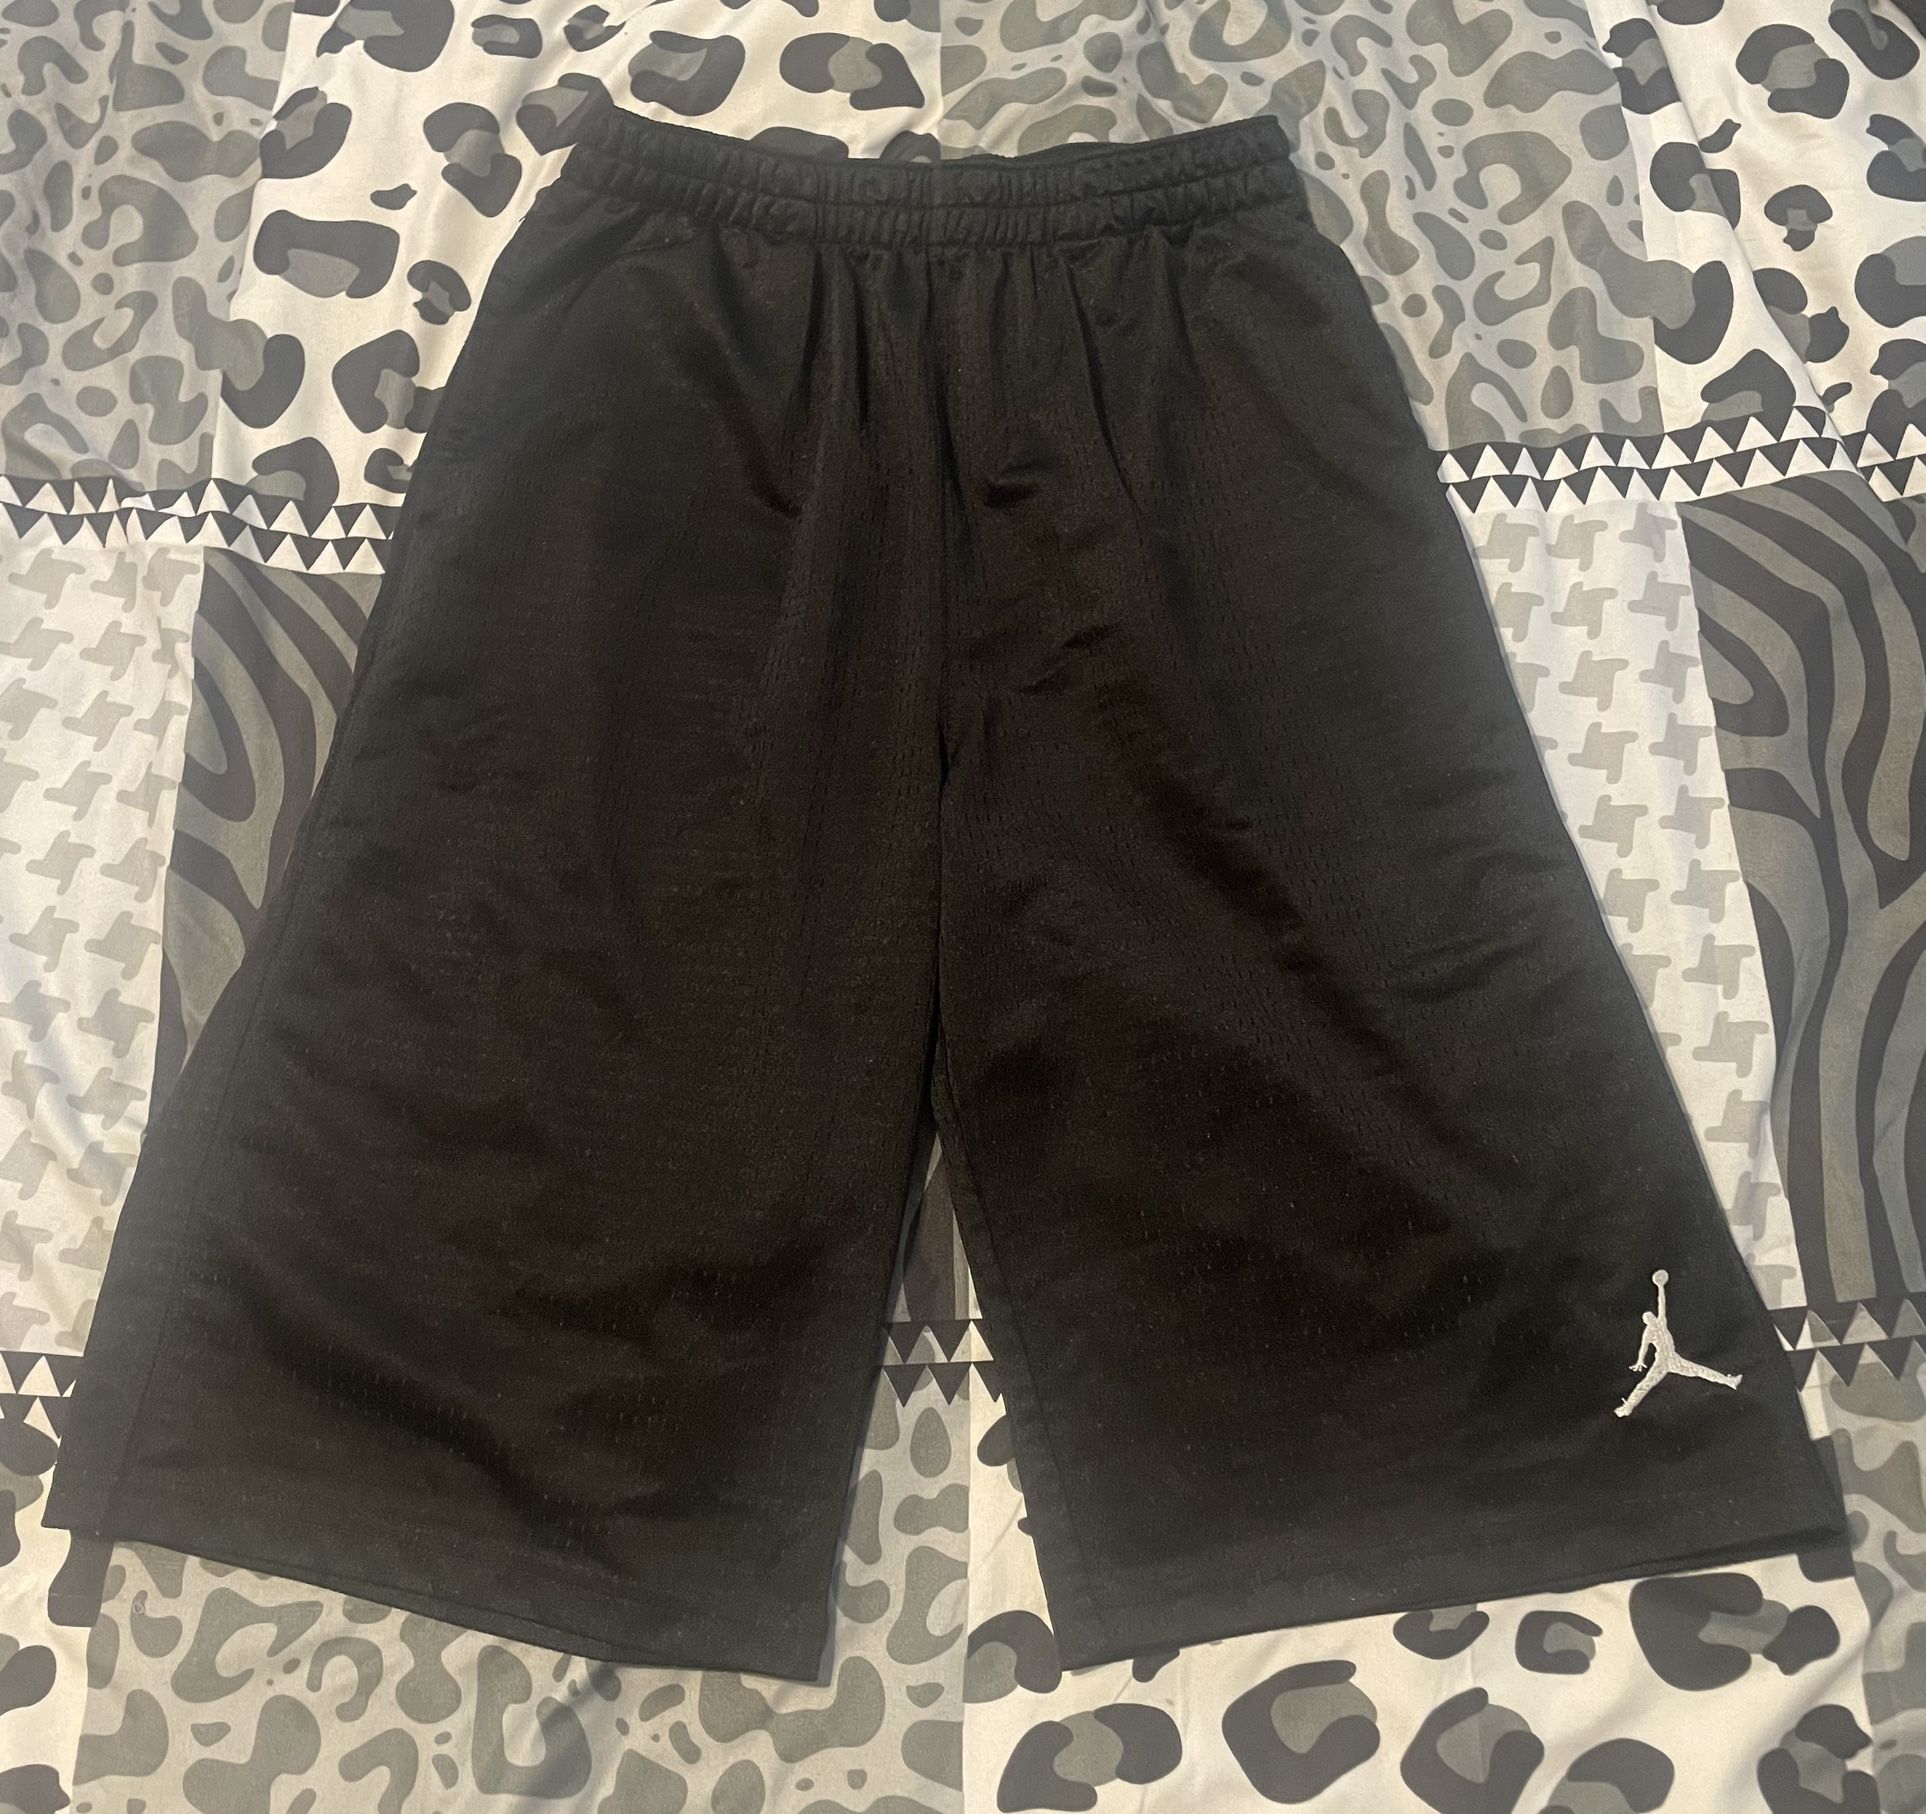 Boys Xl Jordan Shorts Black 13 - 15 Years